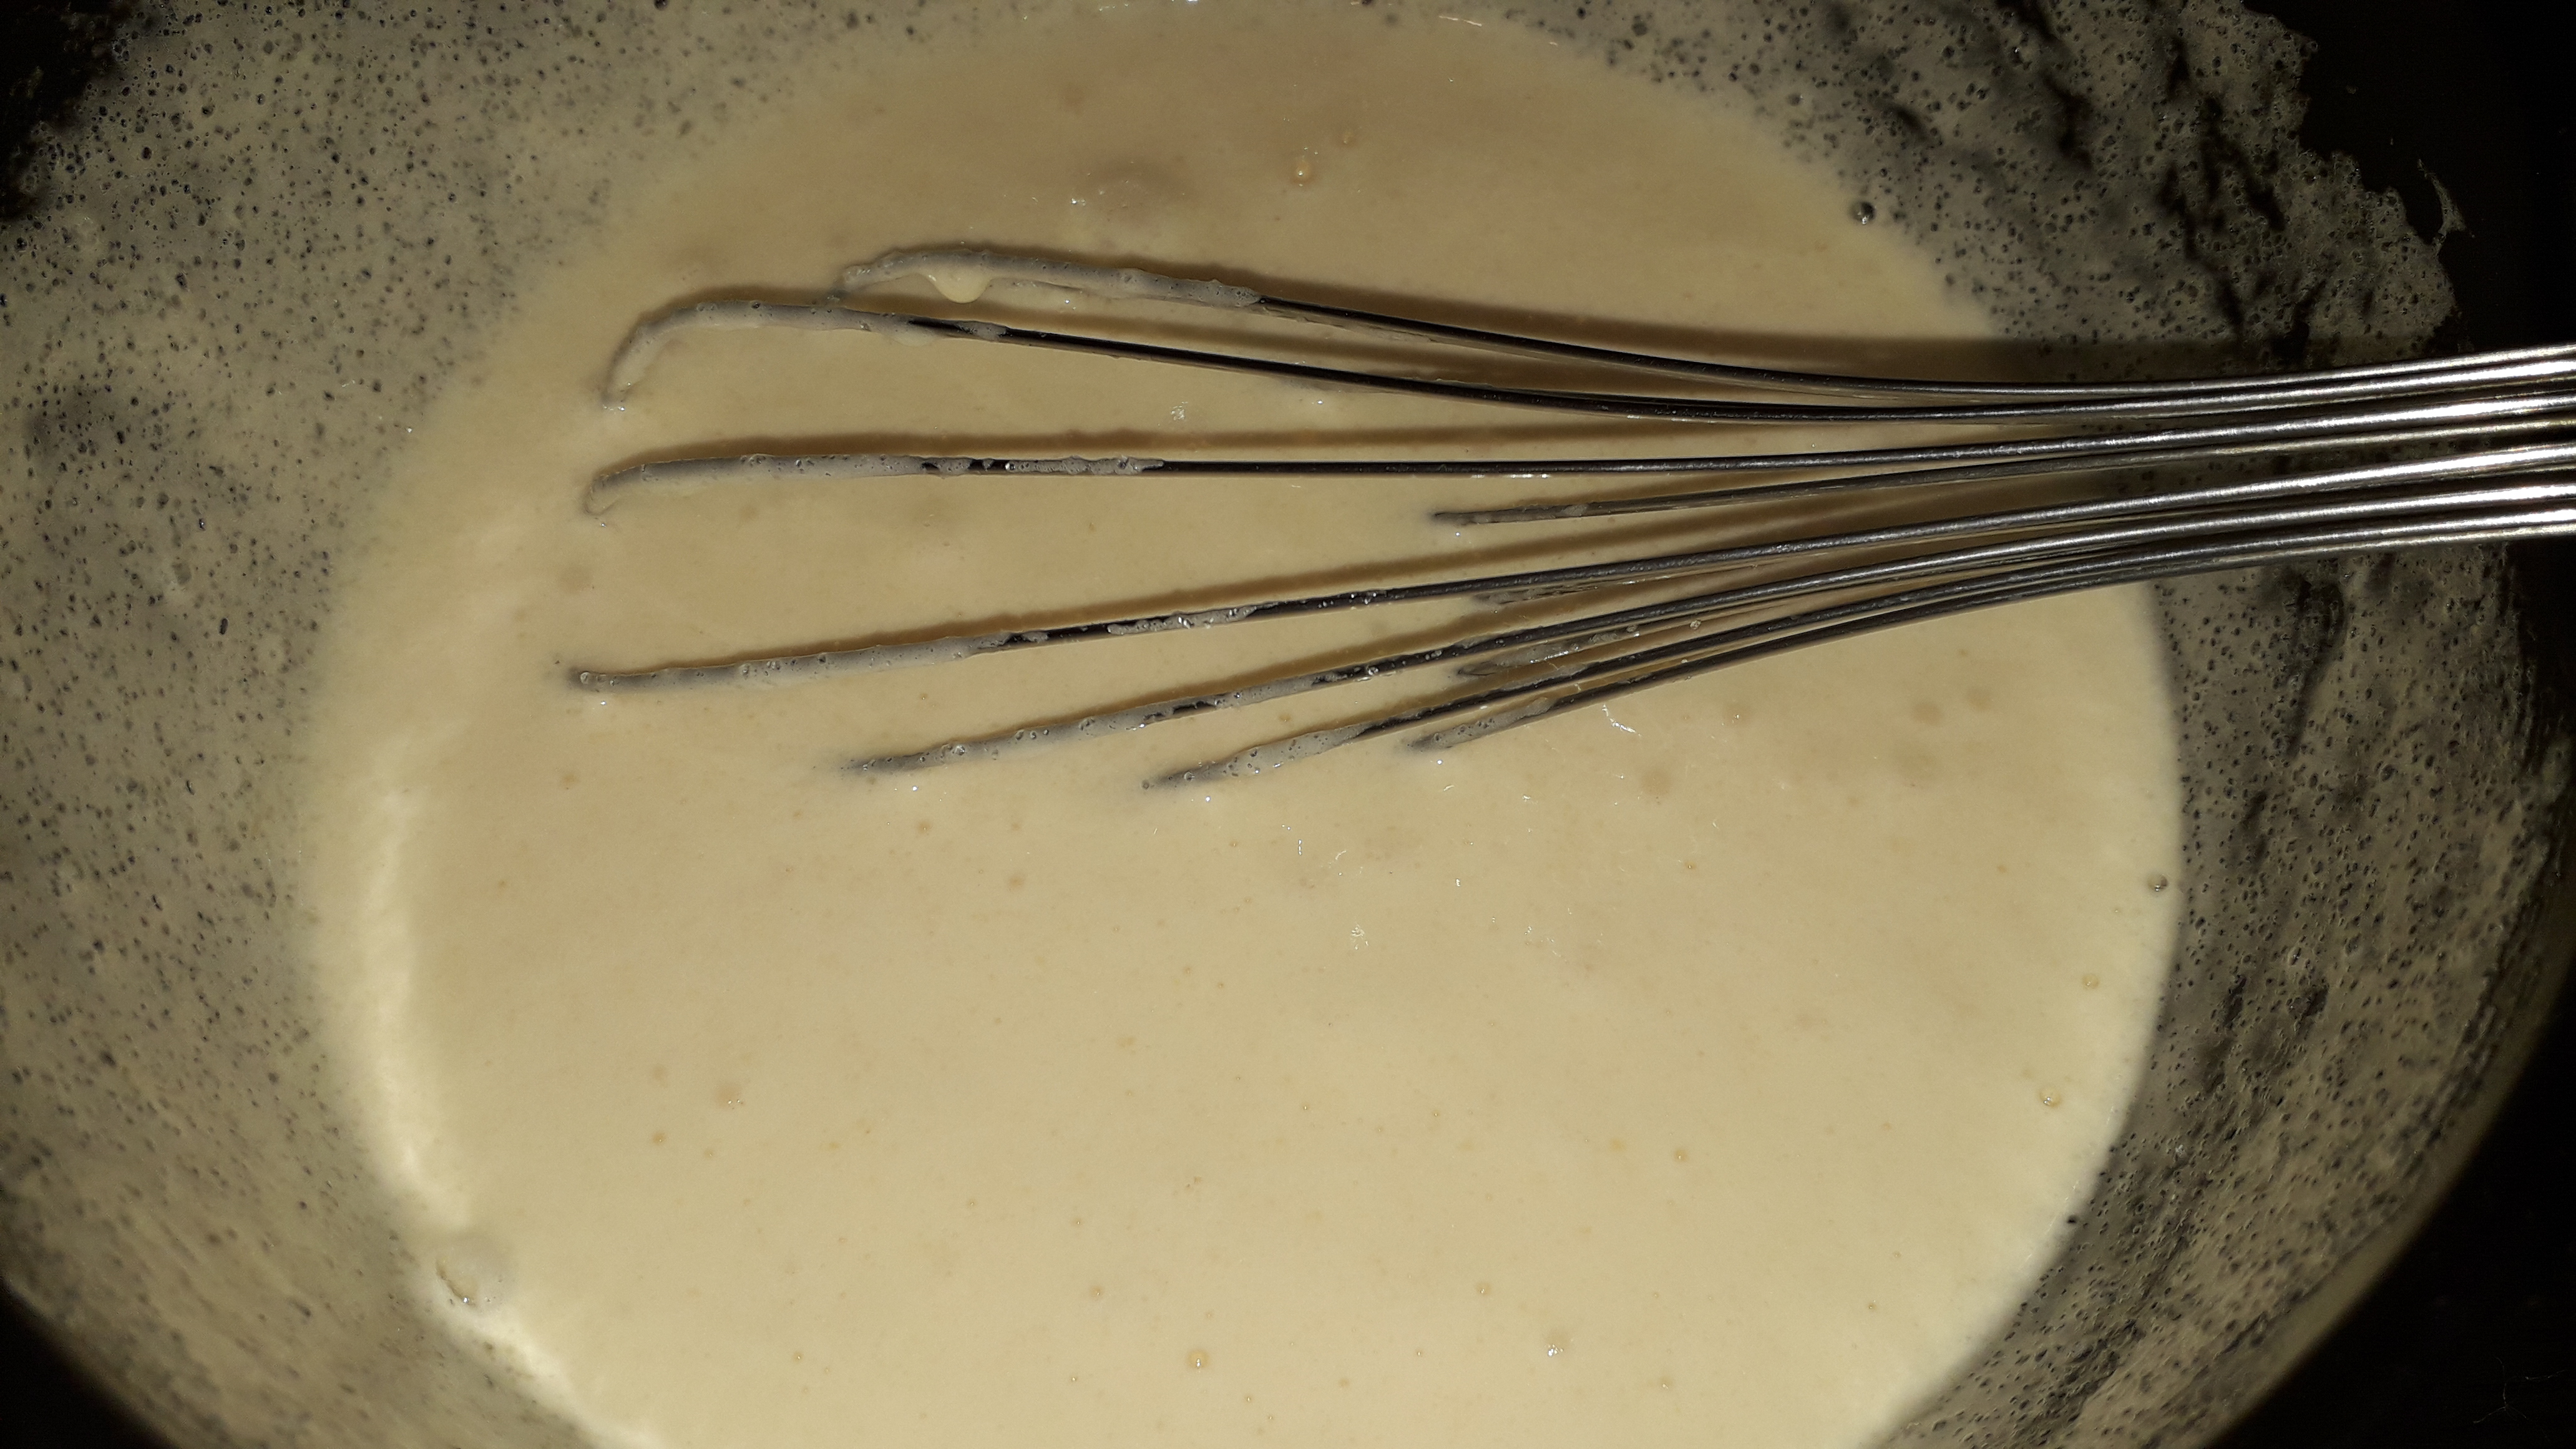 Desert prajitura turnata cu branza si stafide